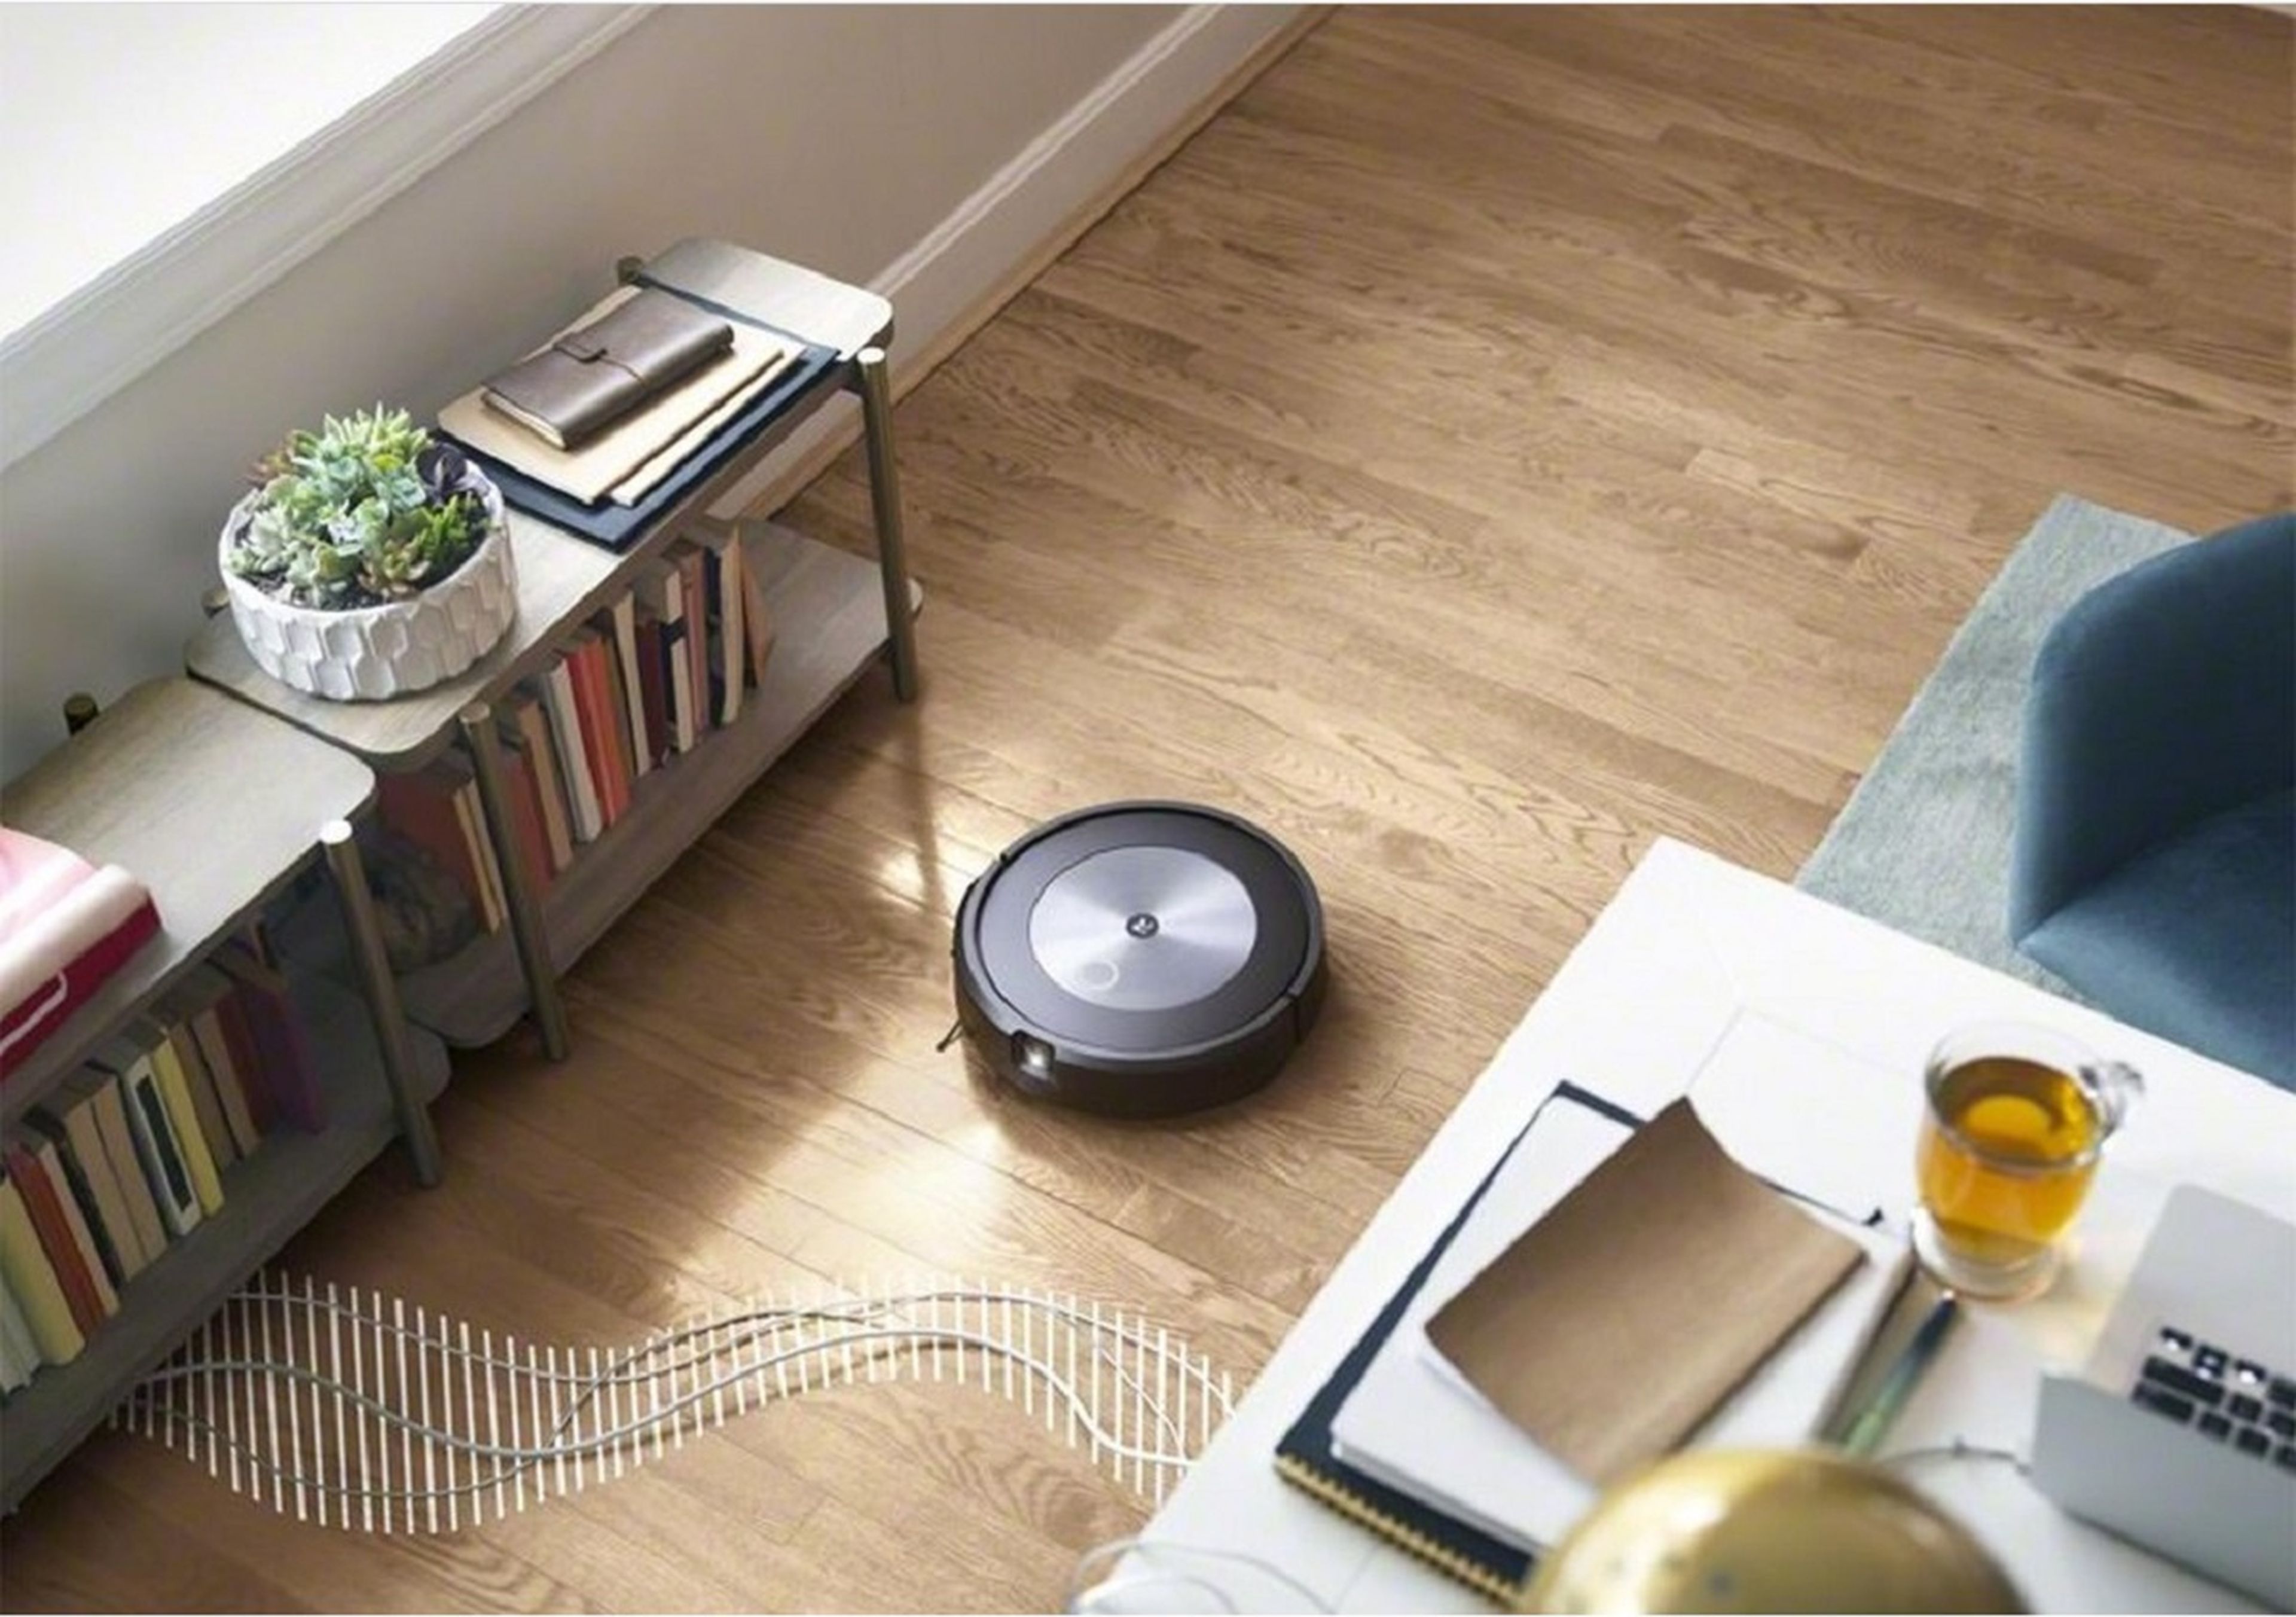 Aspiradora iRobot Roomba J7 control Alexa, Siri o Google Assistant